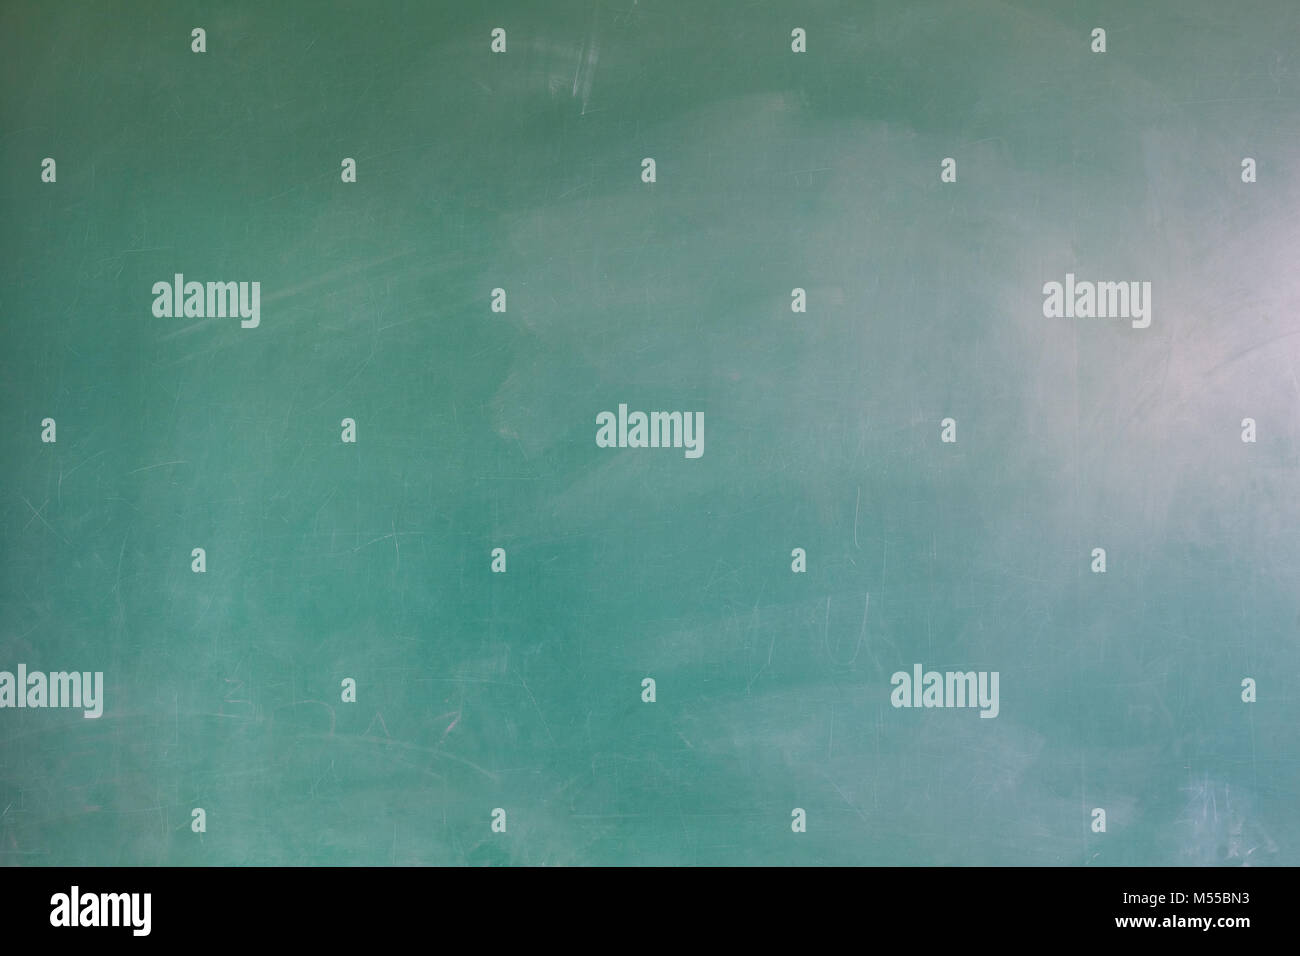 blank green chalkboard background Stock Photo